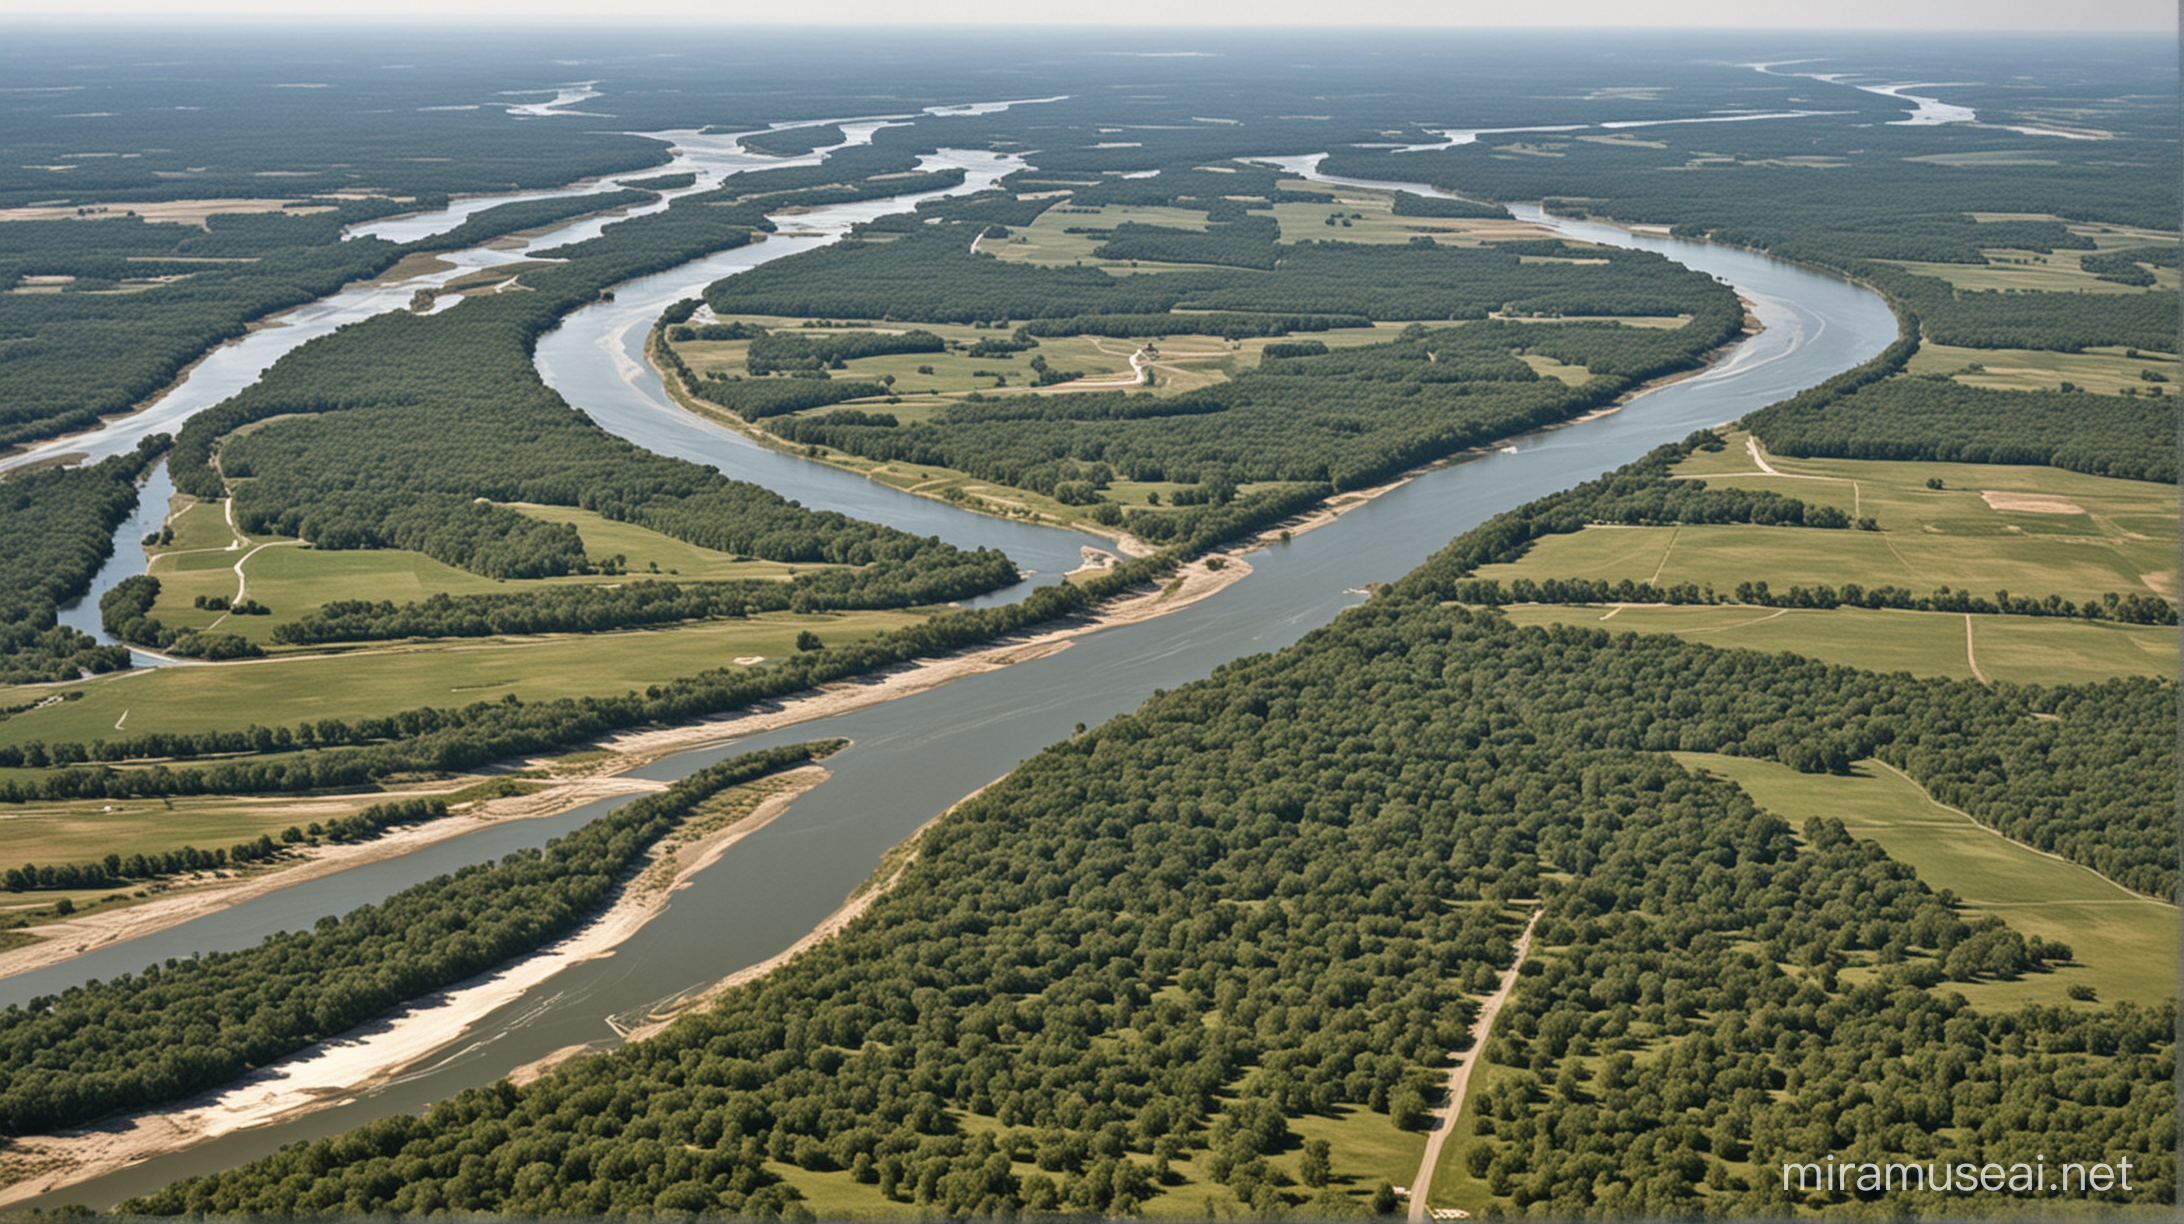 Mississippi-Missouri River System (North America)